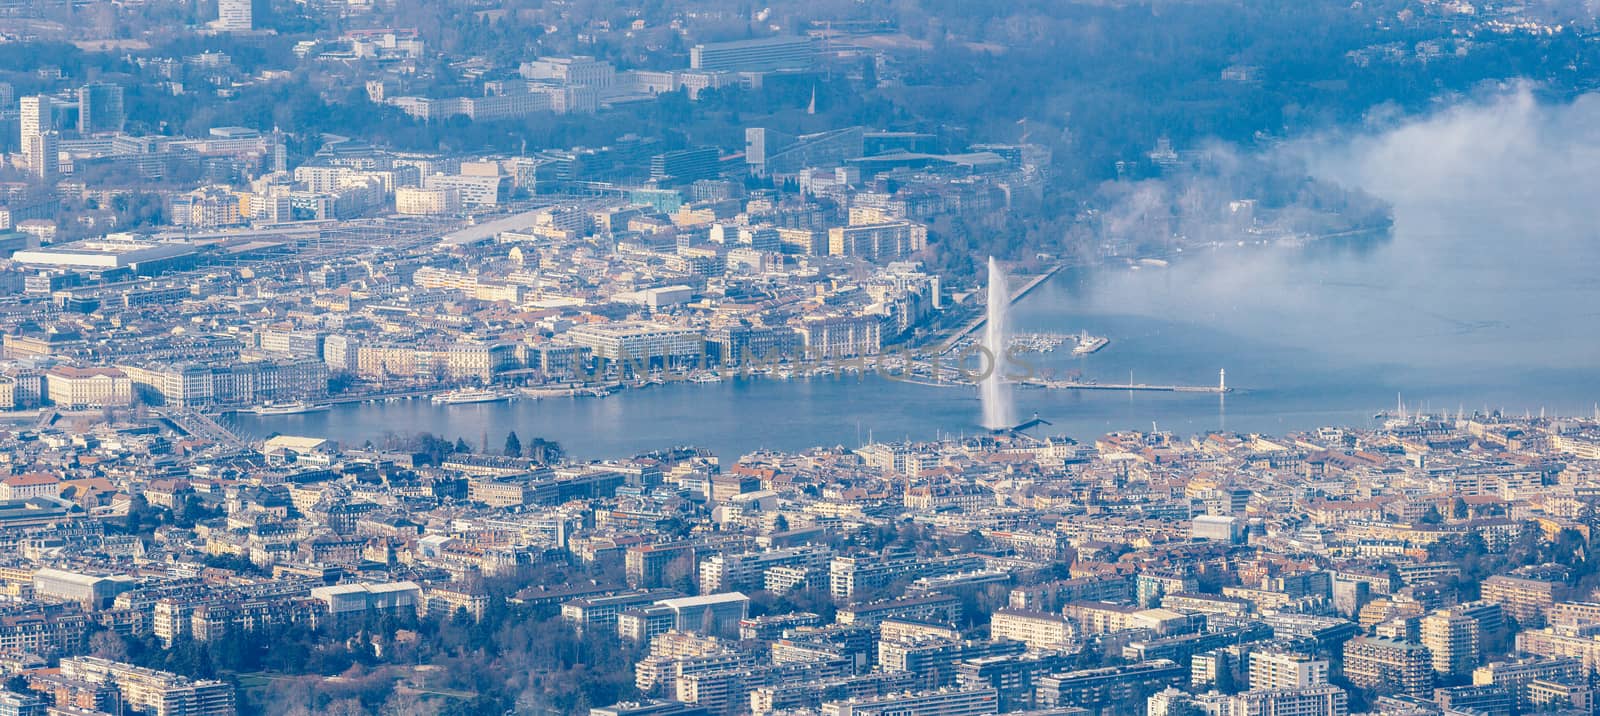 Geneva city center aerial by FCerez